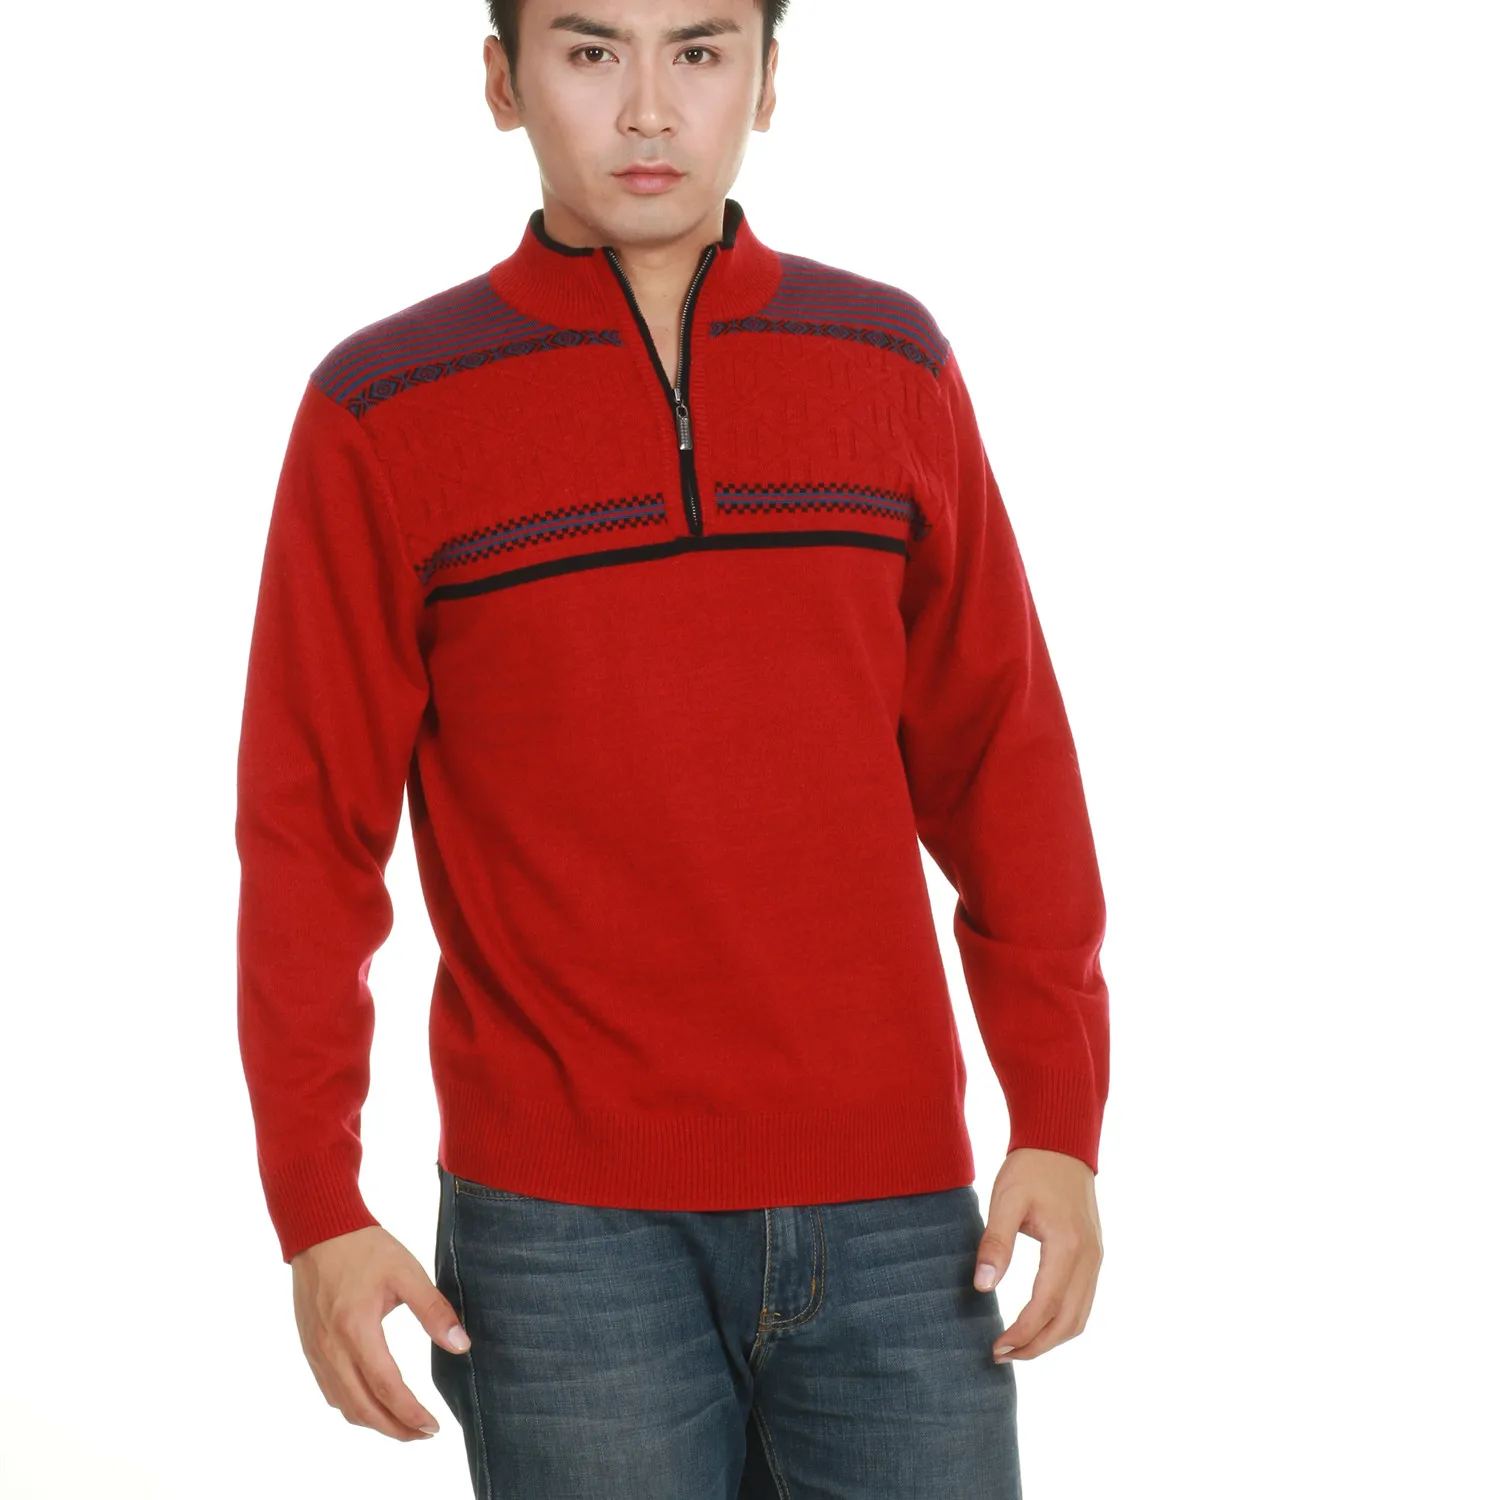 2021 New Men's 1/4 Zip Half Turtleneck Long Sleeve Pullover Sweater, Soft Warm Knit Sweater. mens oversized cardigan Sweaters